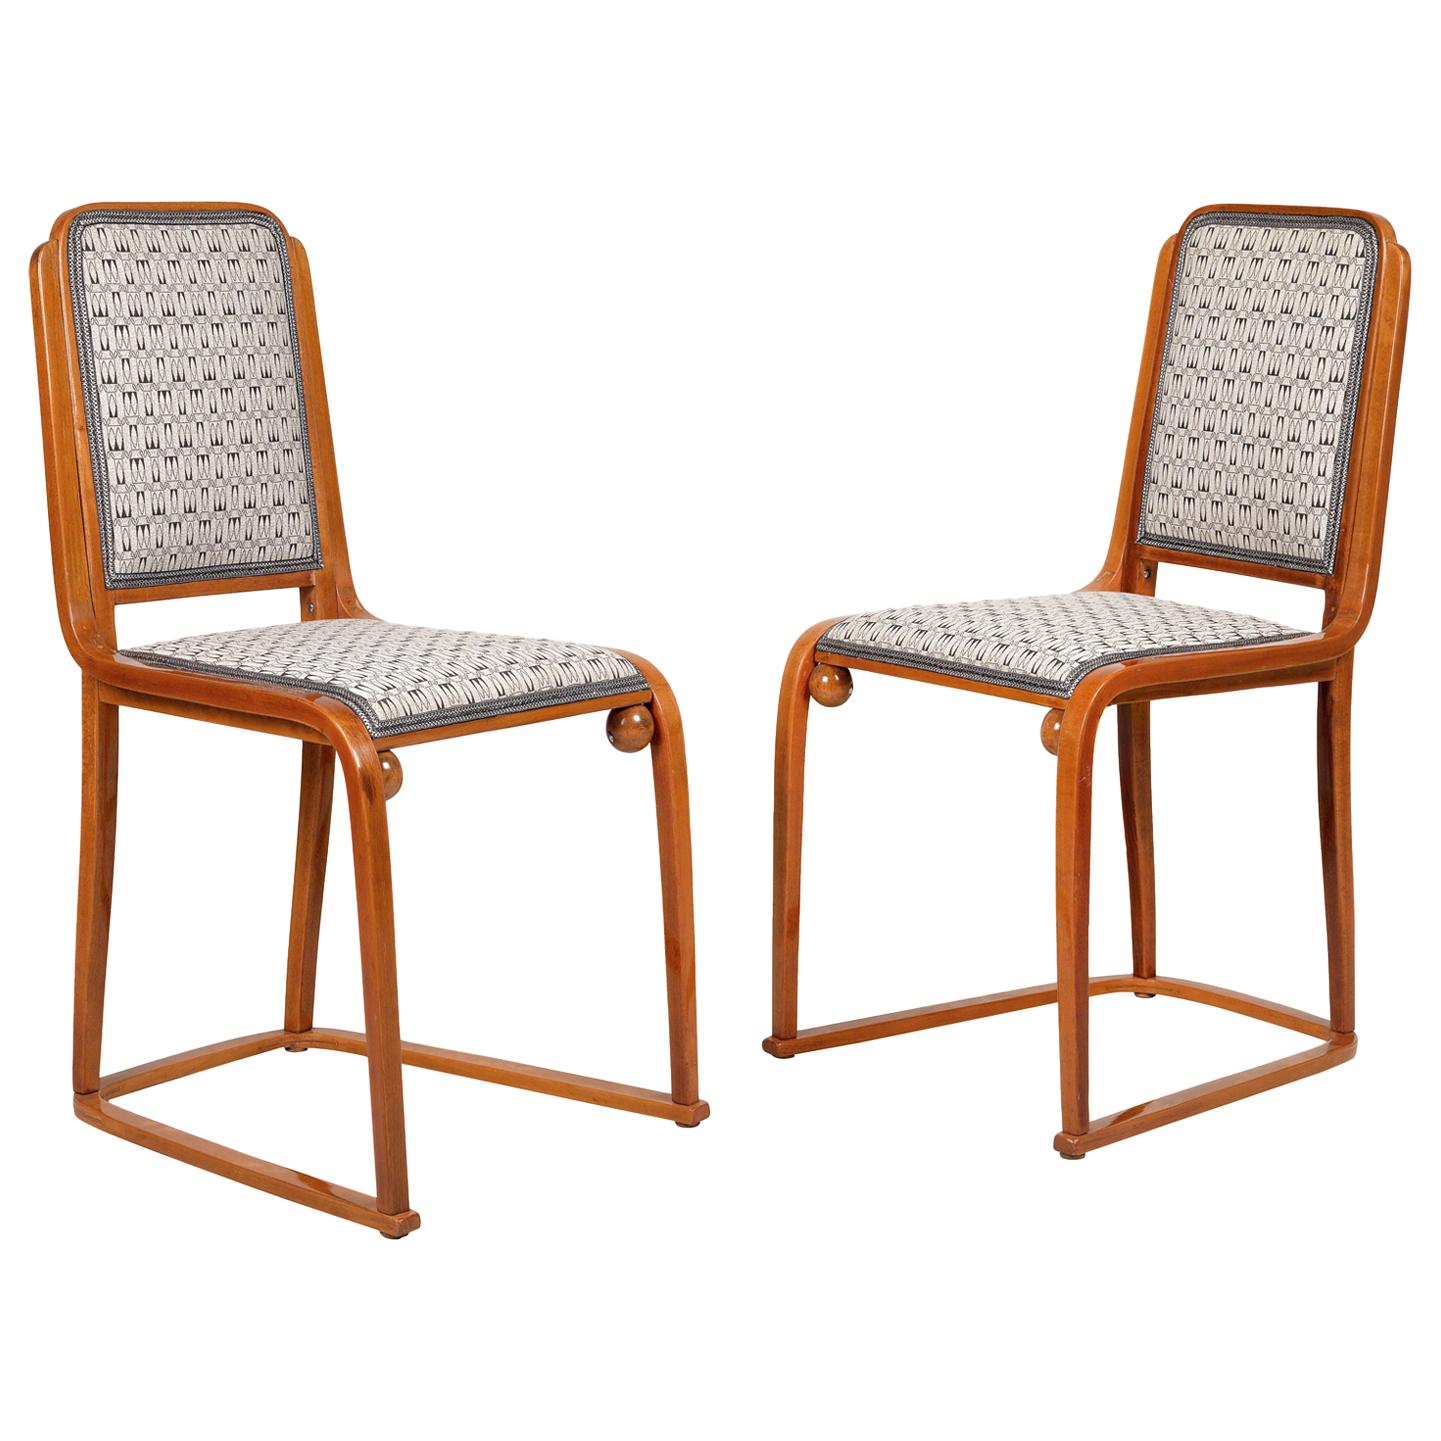 Originals 1905 of the Period Pair of Josef Hoffmann and Jacob&Josef Kohn Chairs